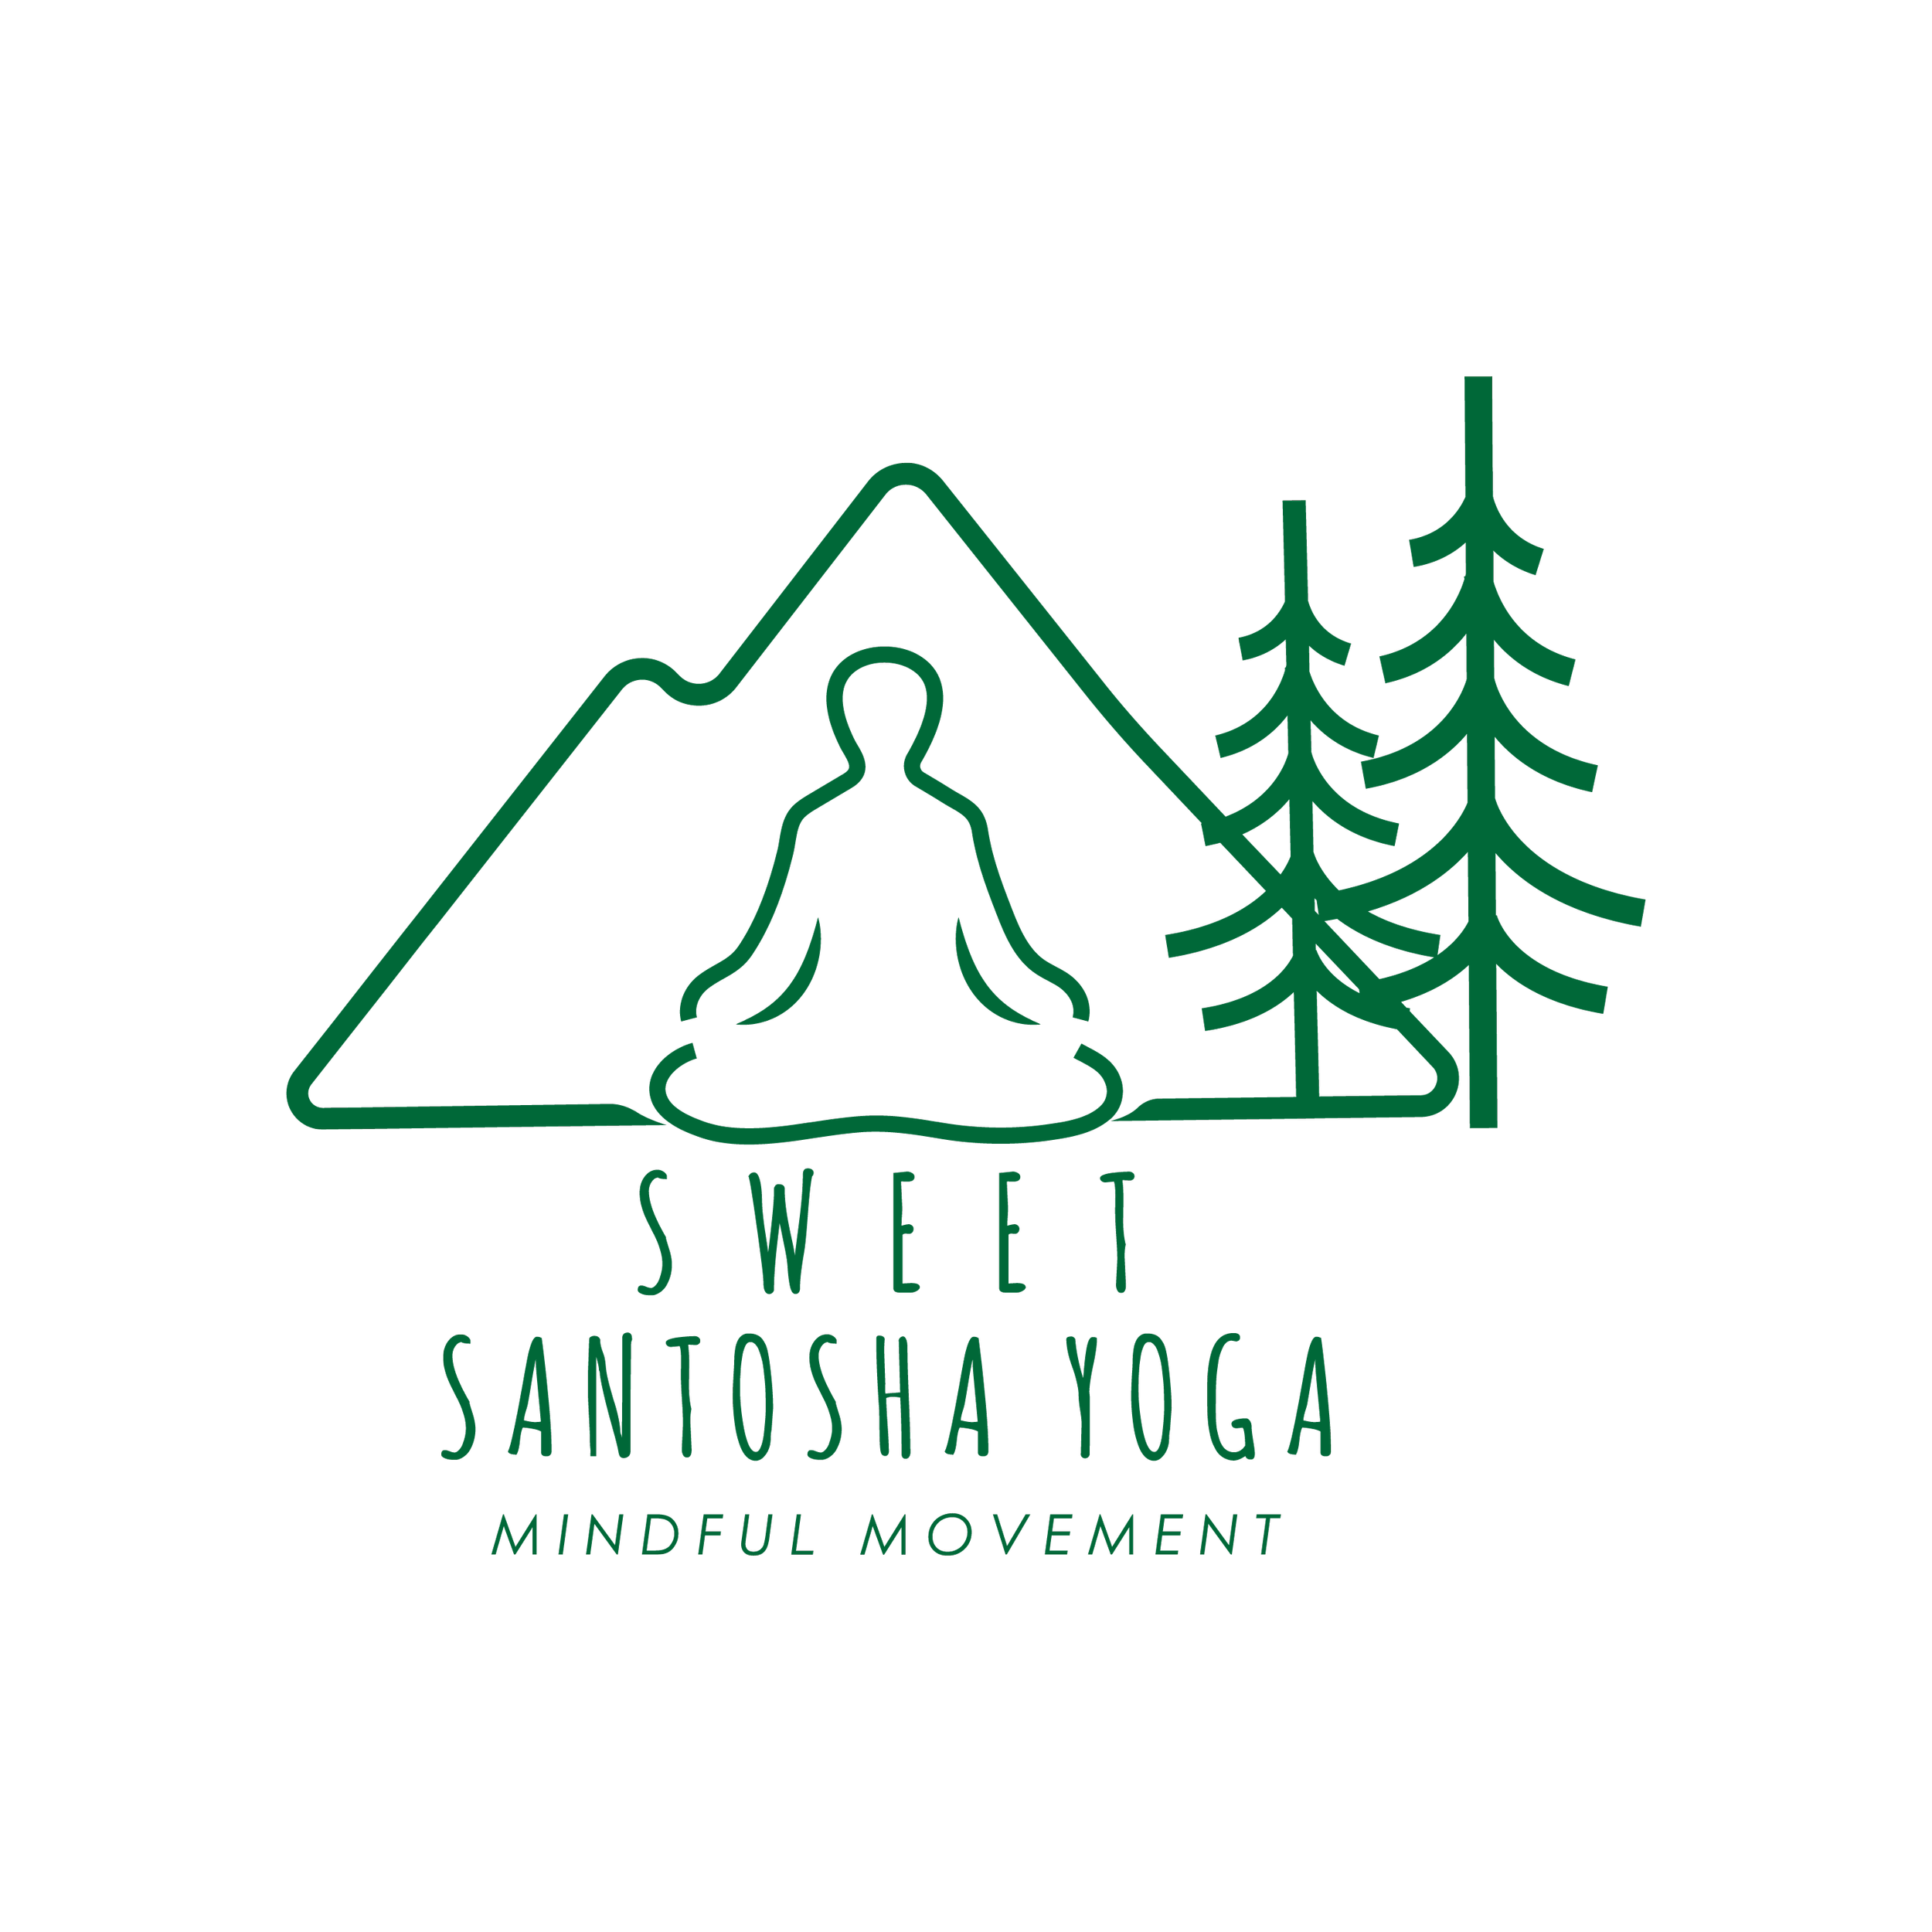 Sweet Santosha Yoga Logo_01.png